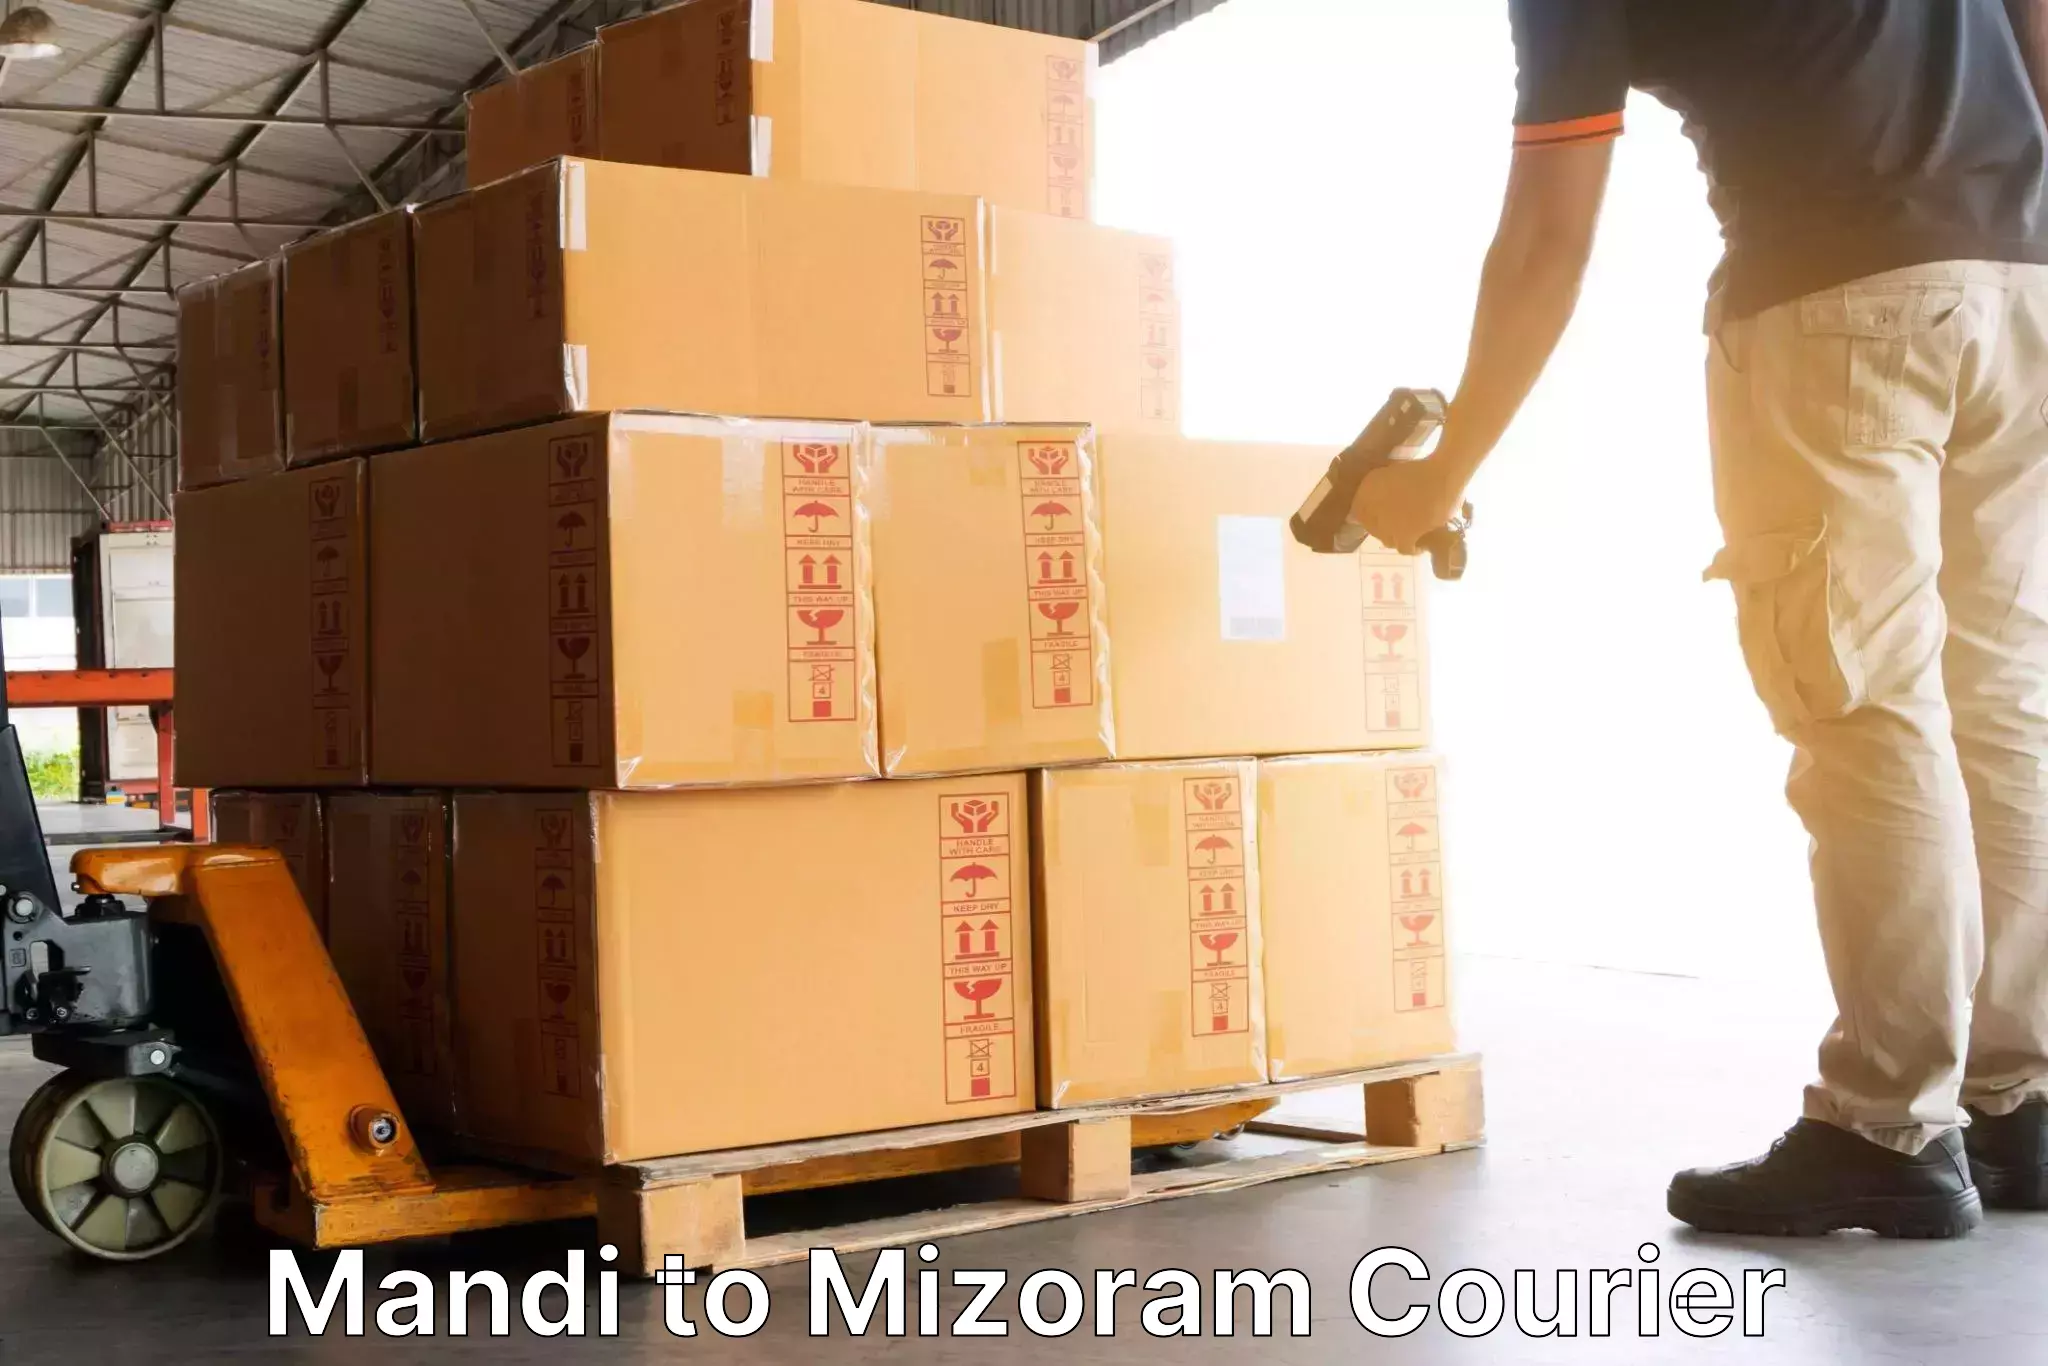 Global shipping networks Mandi to Mizoram